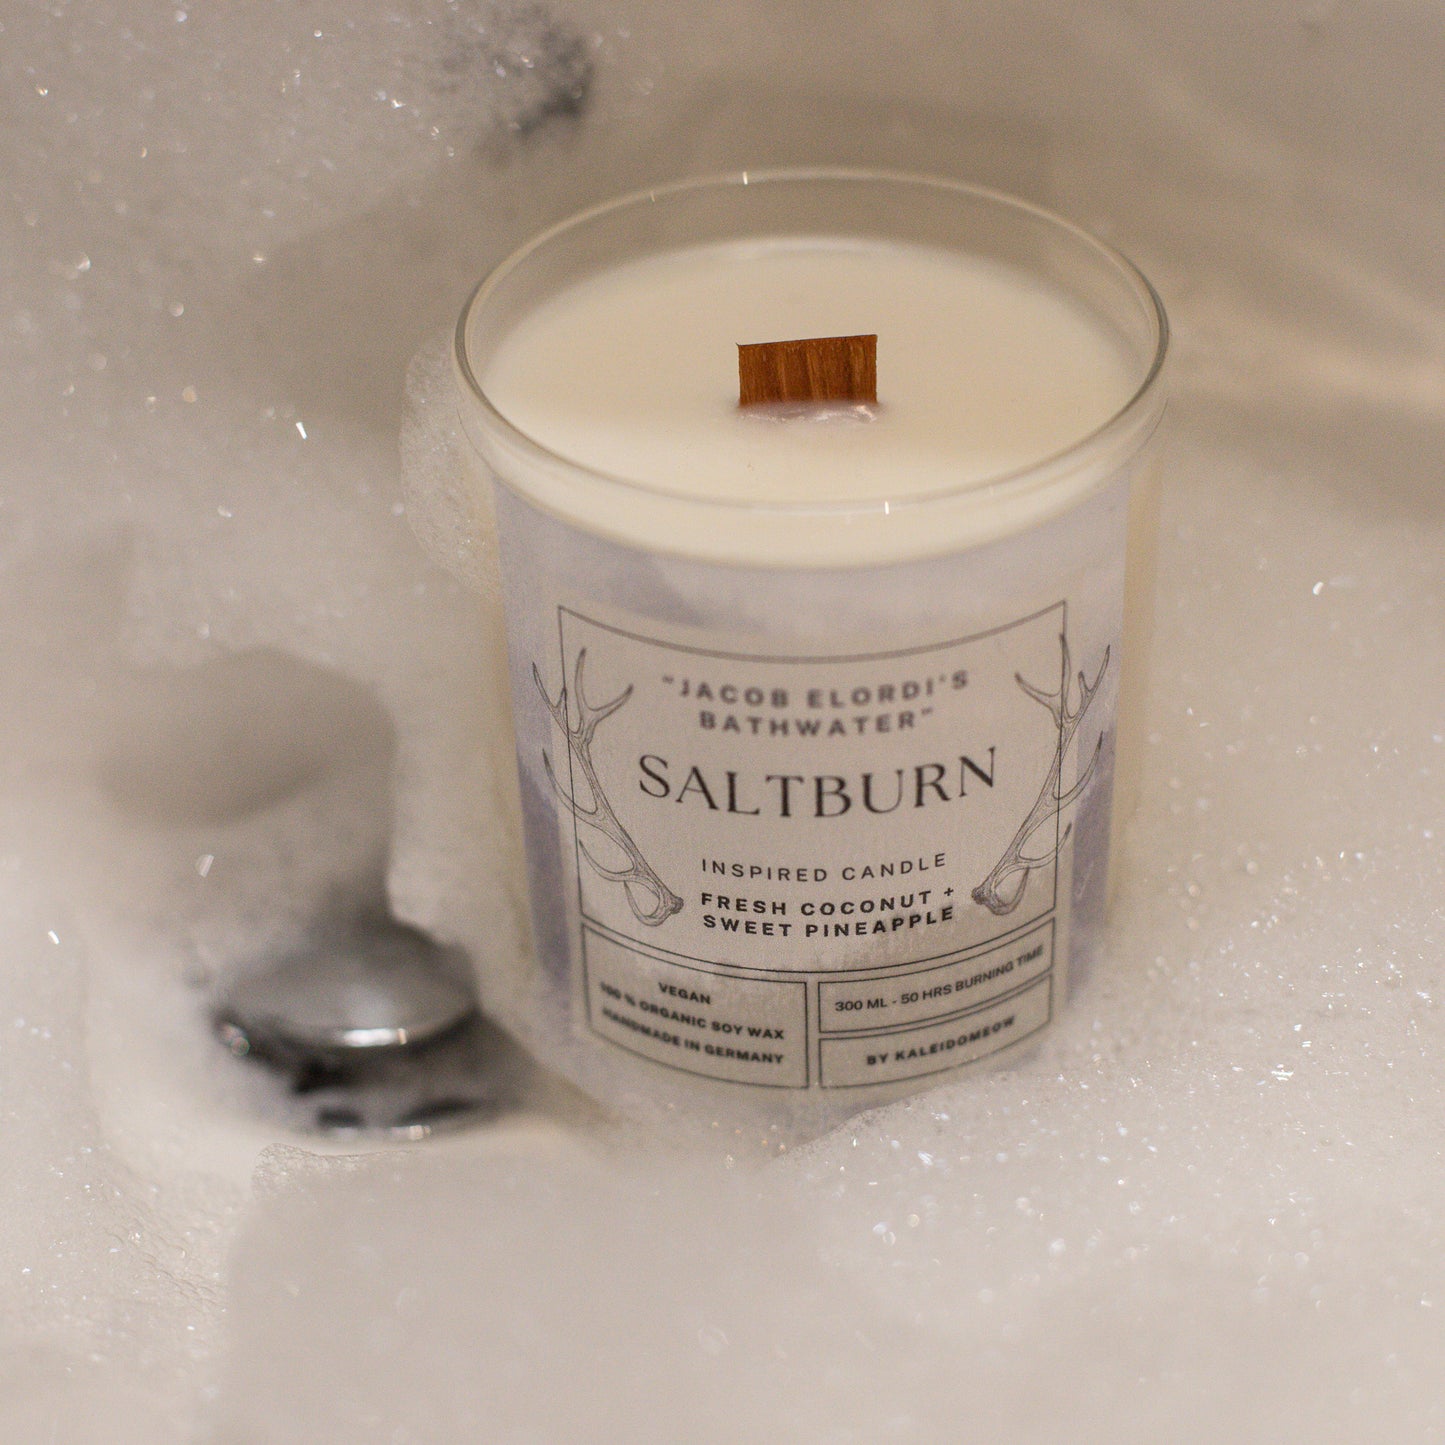 SALTBURN inspired soy candle - 'Jacob Elordi's Bathwater' 300 ML